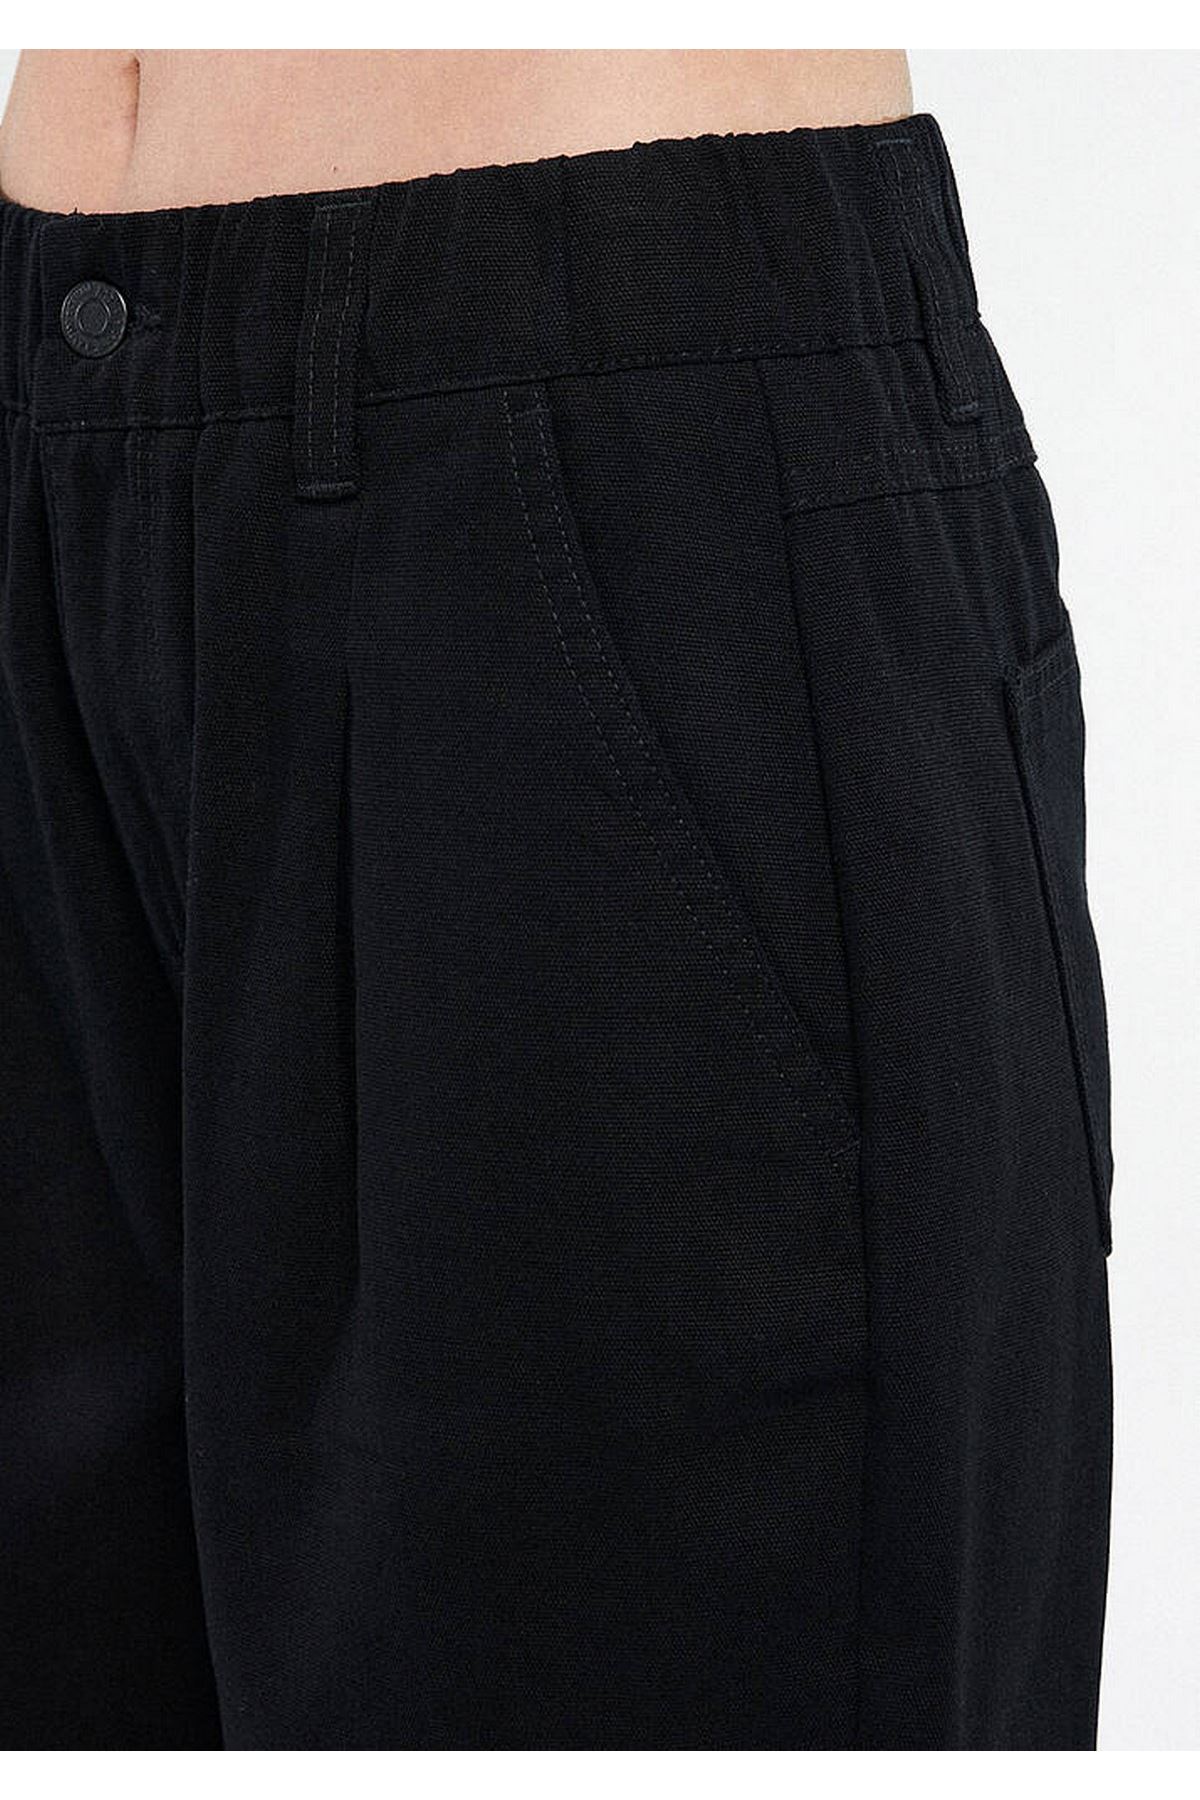 Dokuma Mavi Kadın Siyah Kanvas Pantolon - M1010065-900